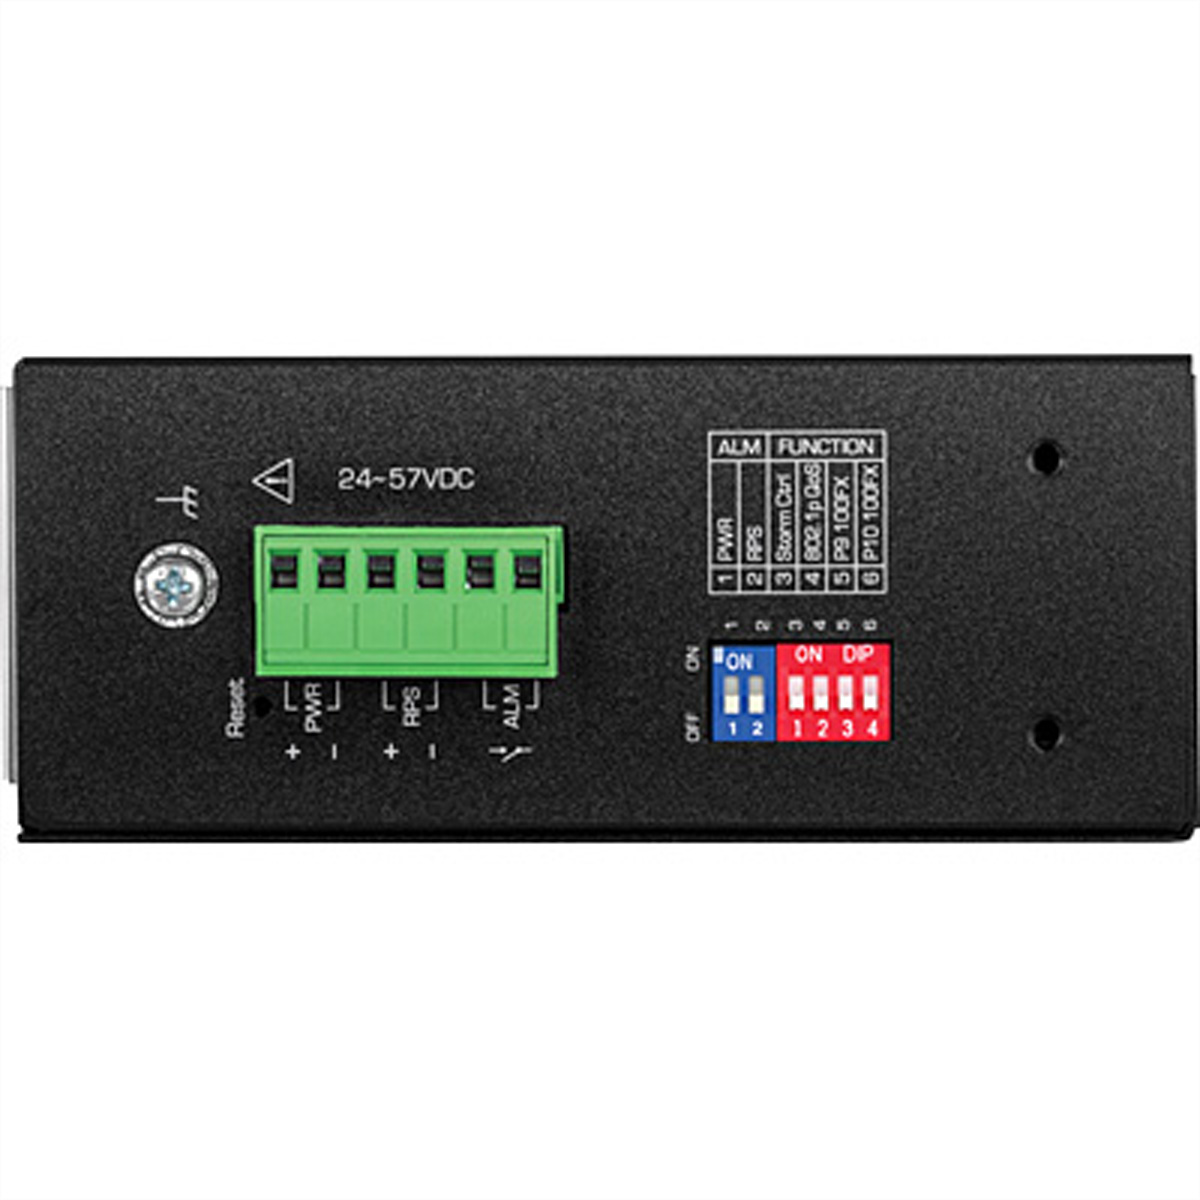 TRENDNET Industrial DIN-Rail 10-Port Managed Switch Networking TI-PG102i PoE+ Gigabit Industrial